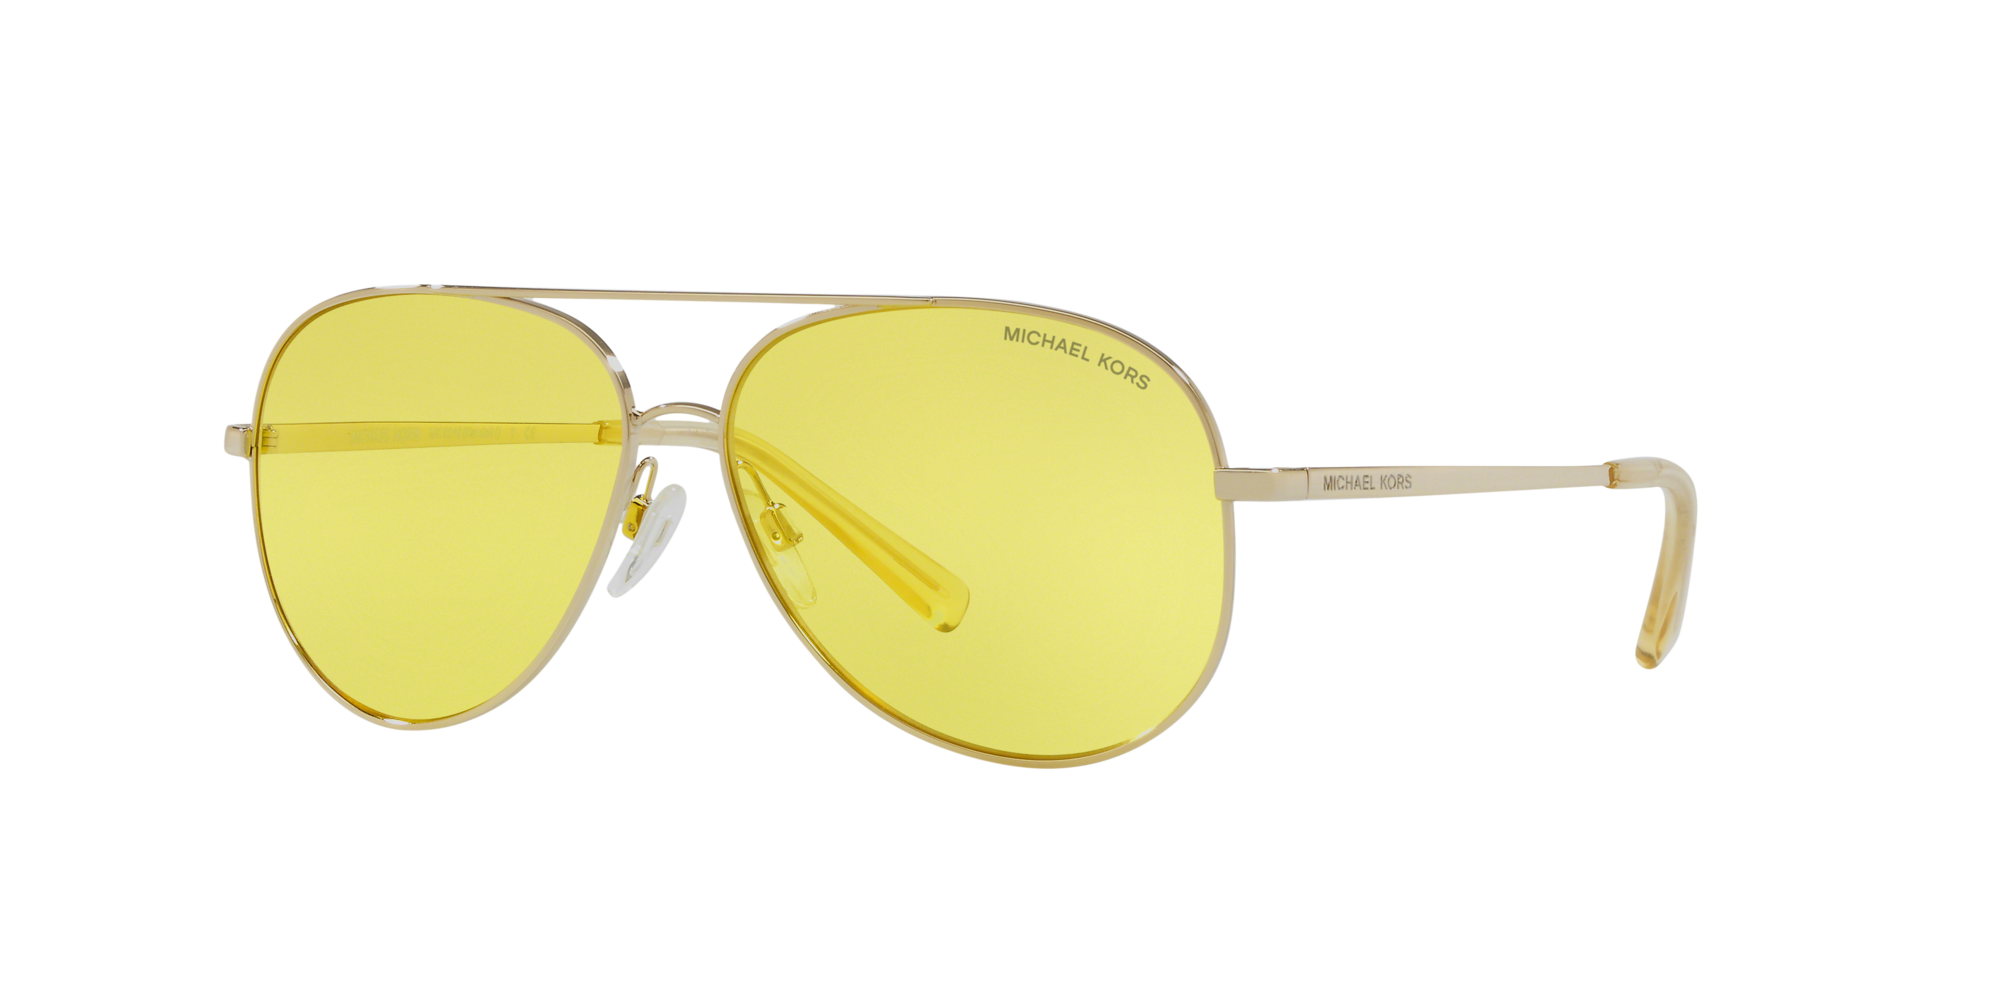 michael kors yellow sunglasses